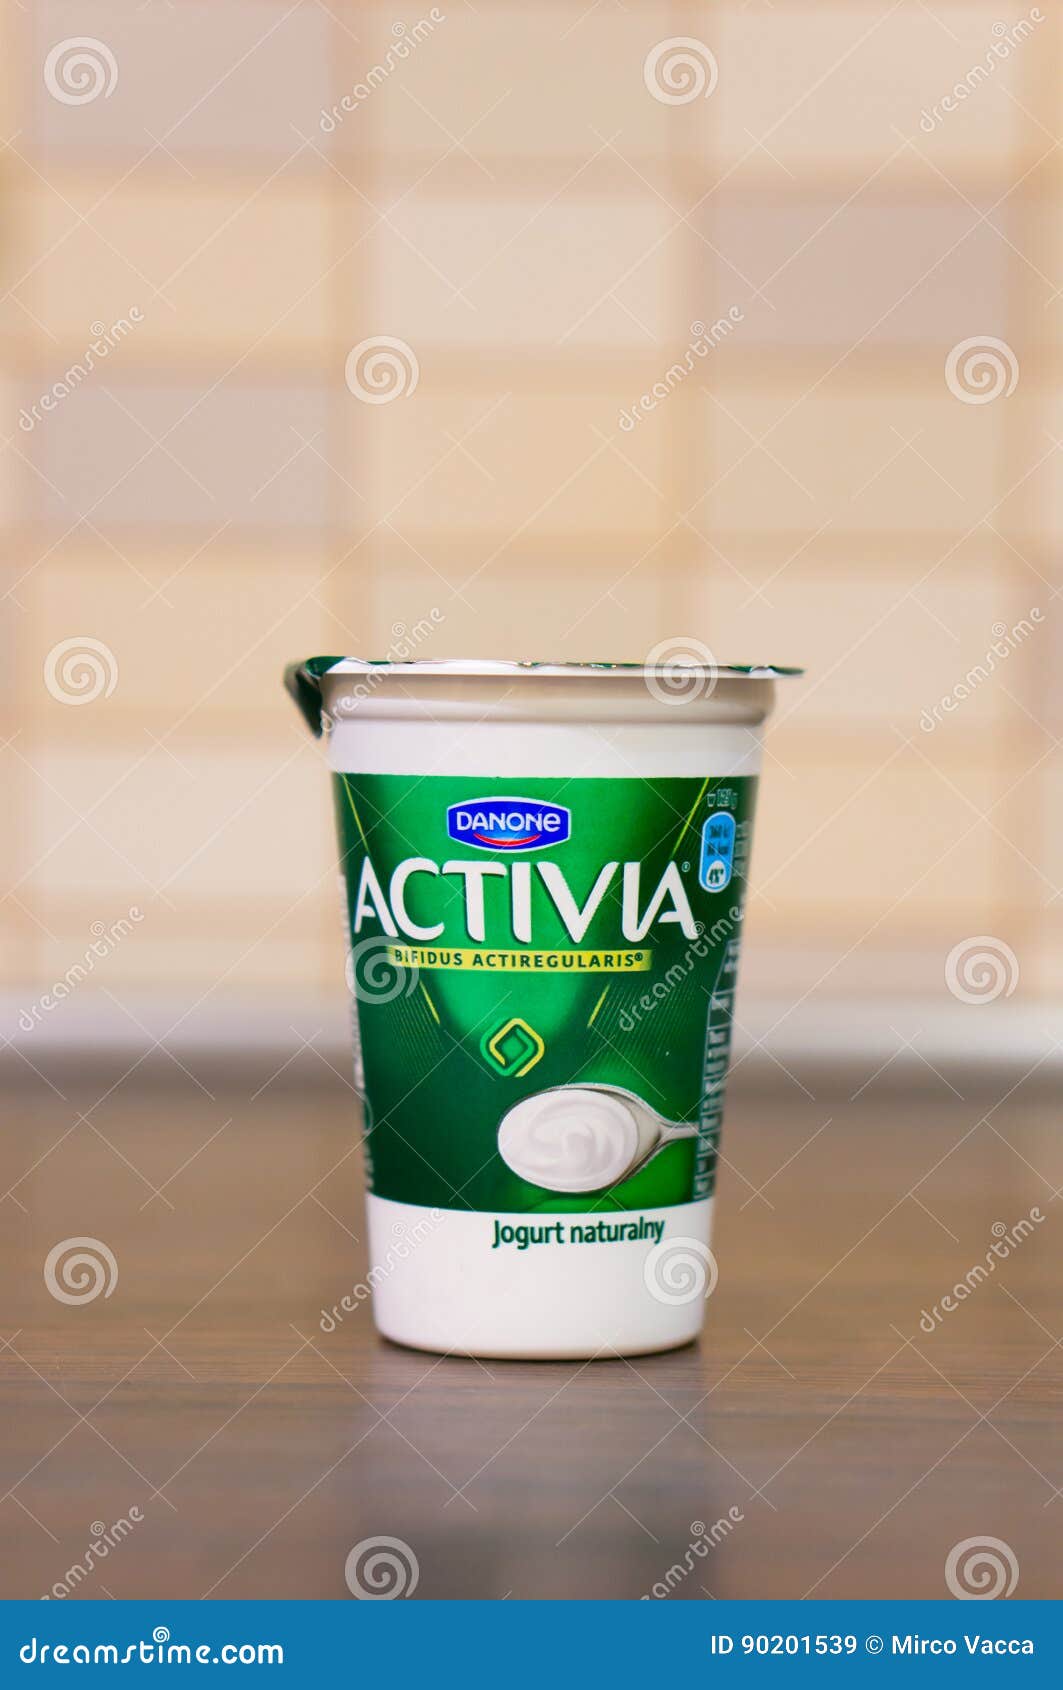 Danone Activia yogurt editorial stock image. Image of food - 90201539